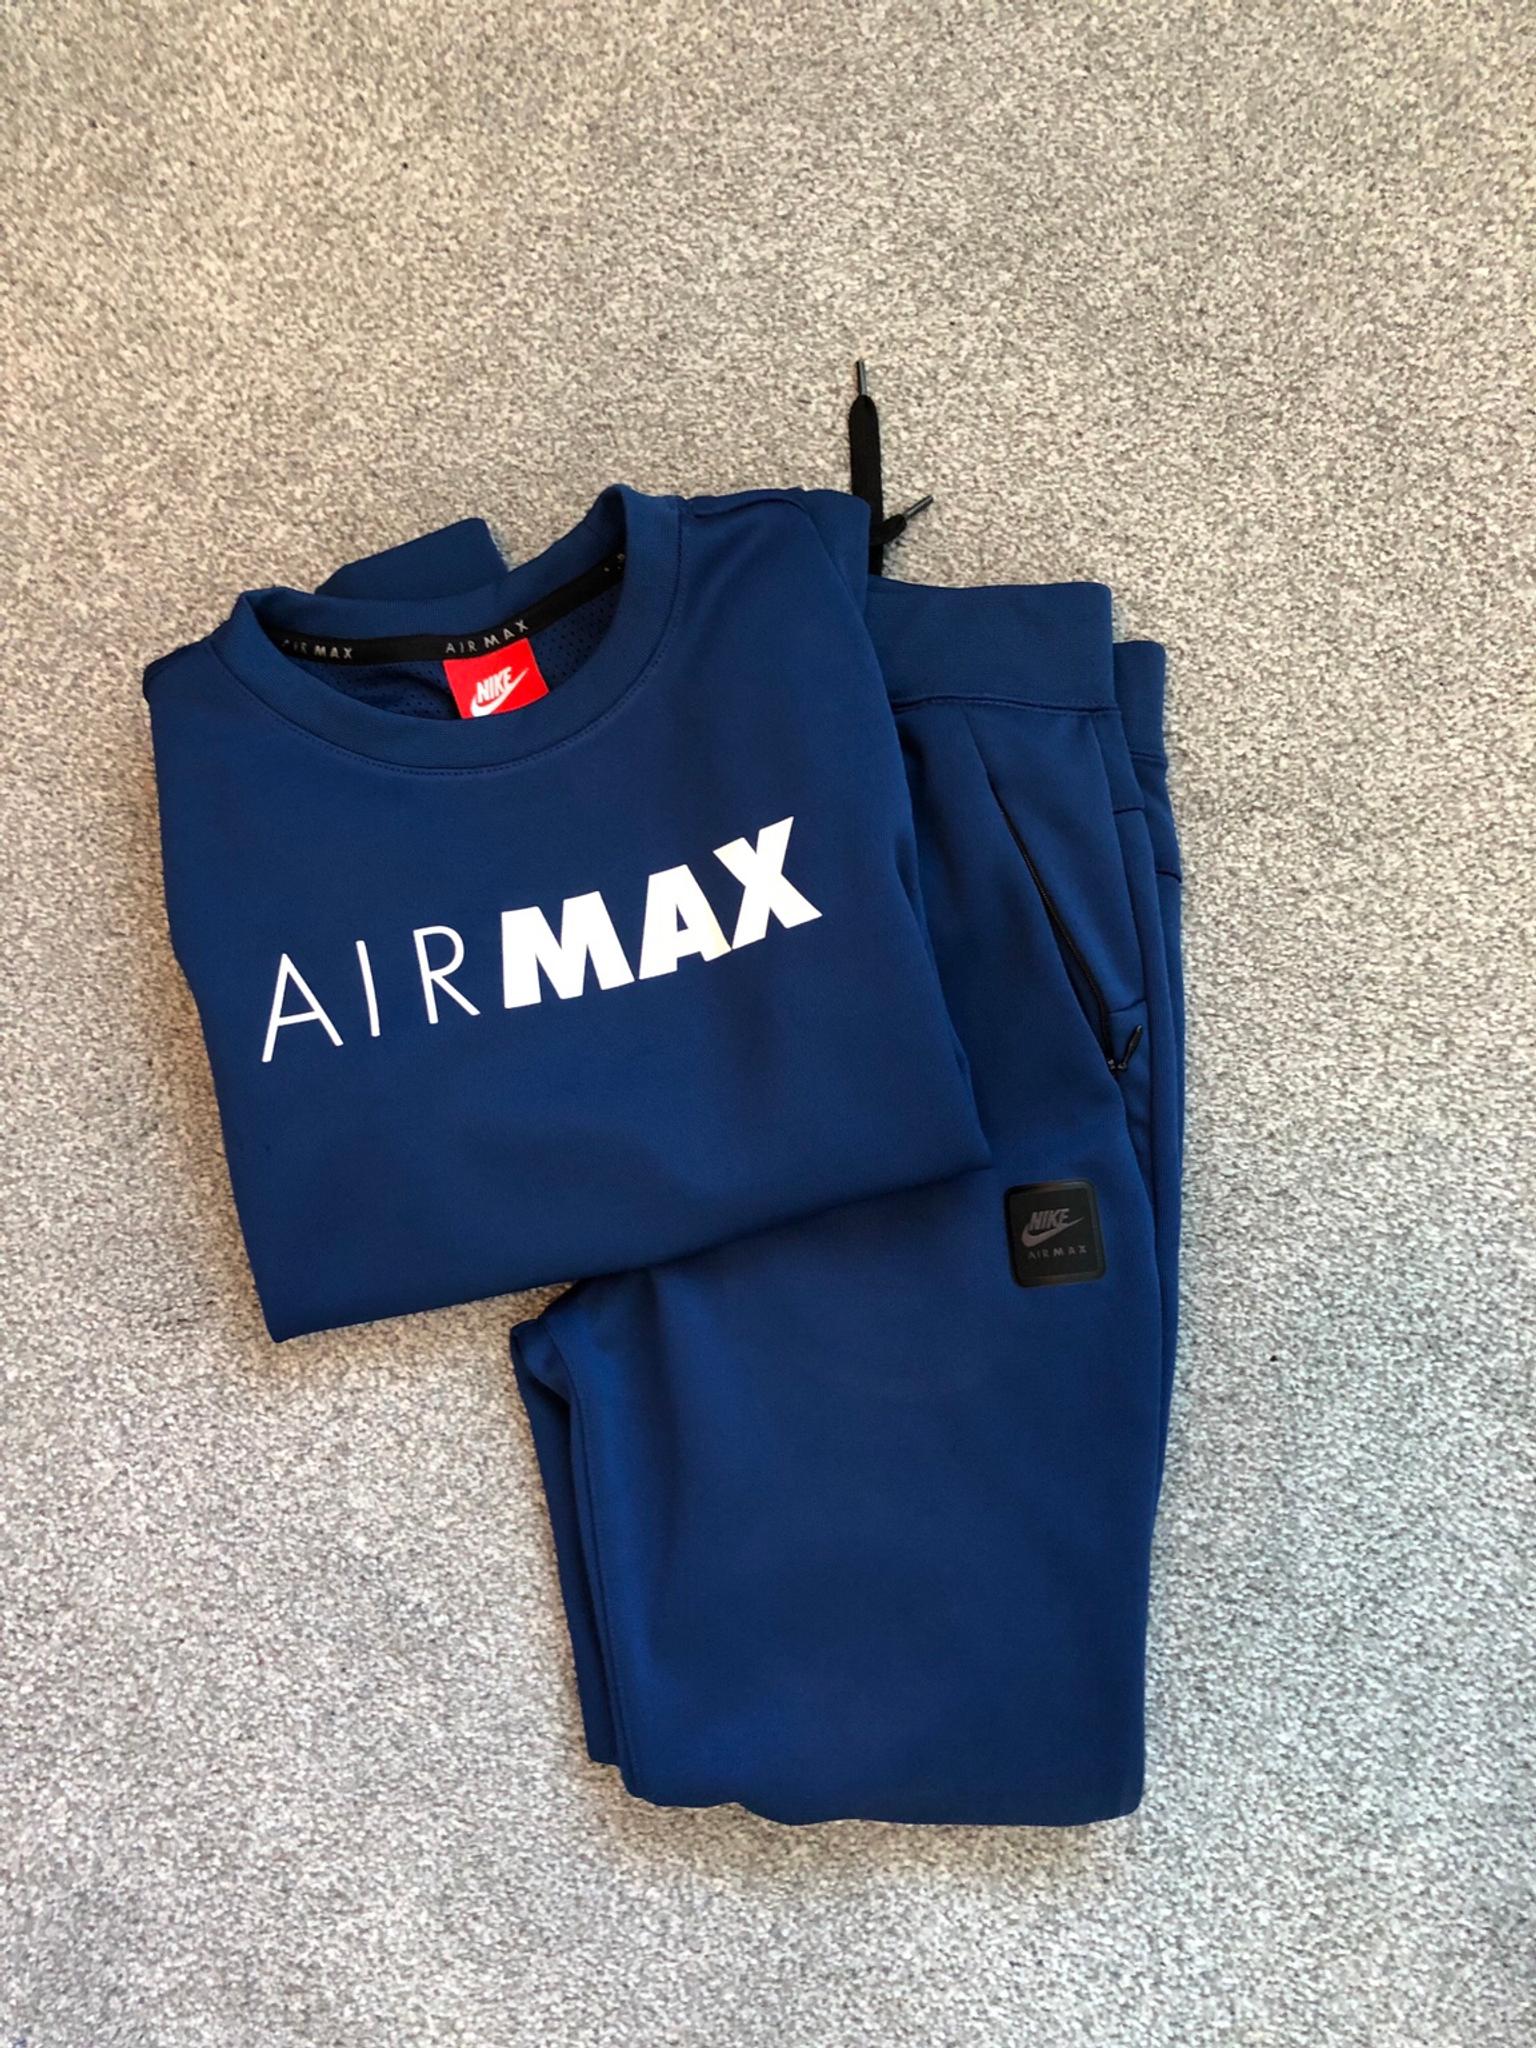 nike air max tracksuit blue